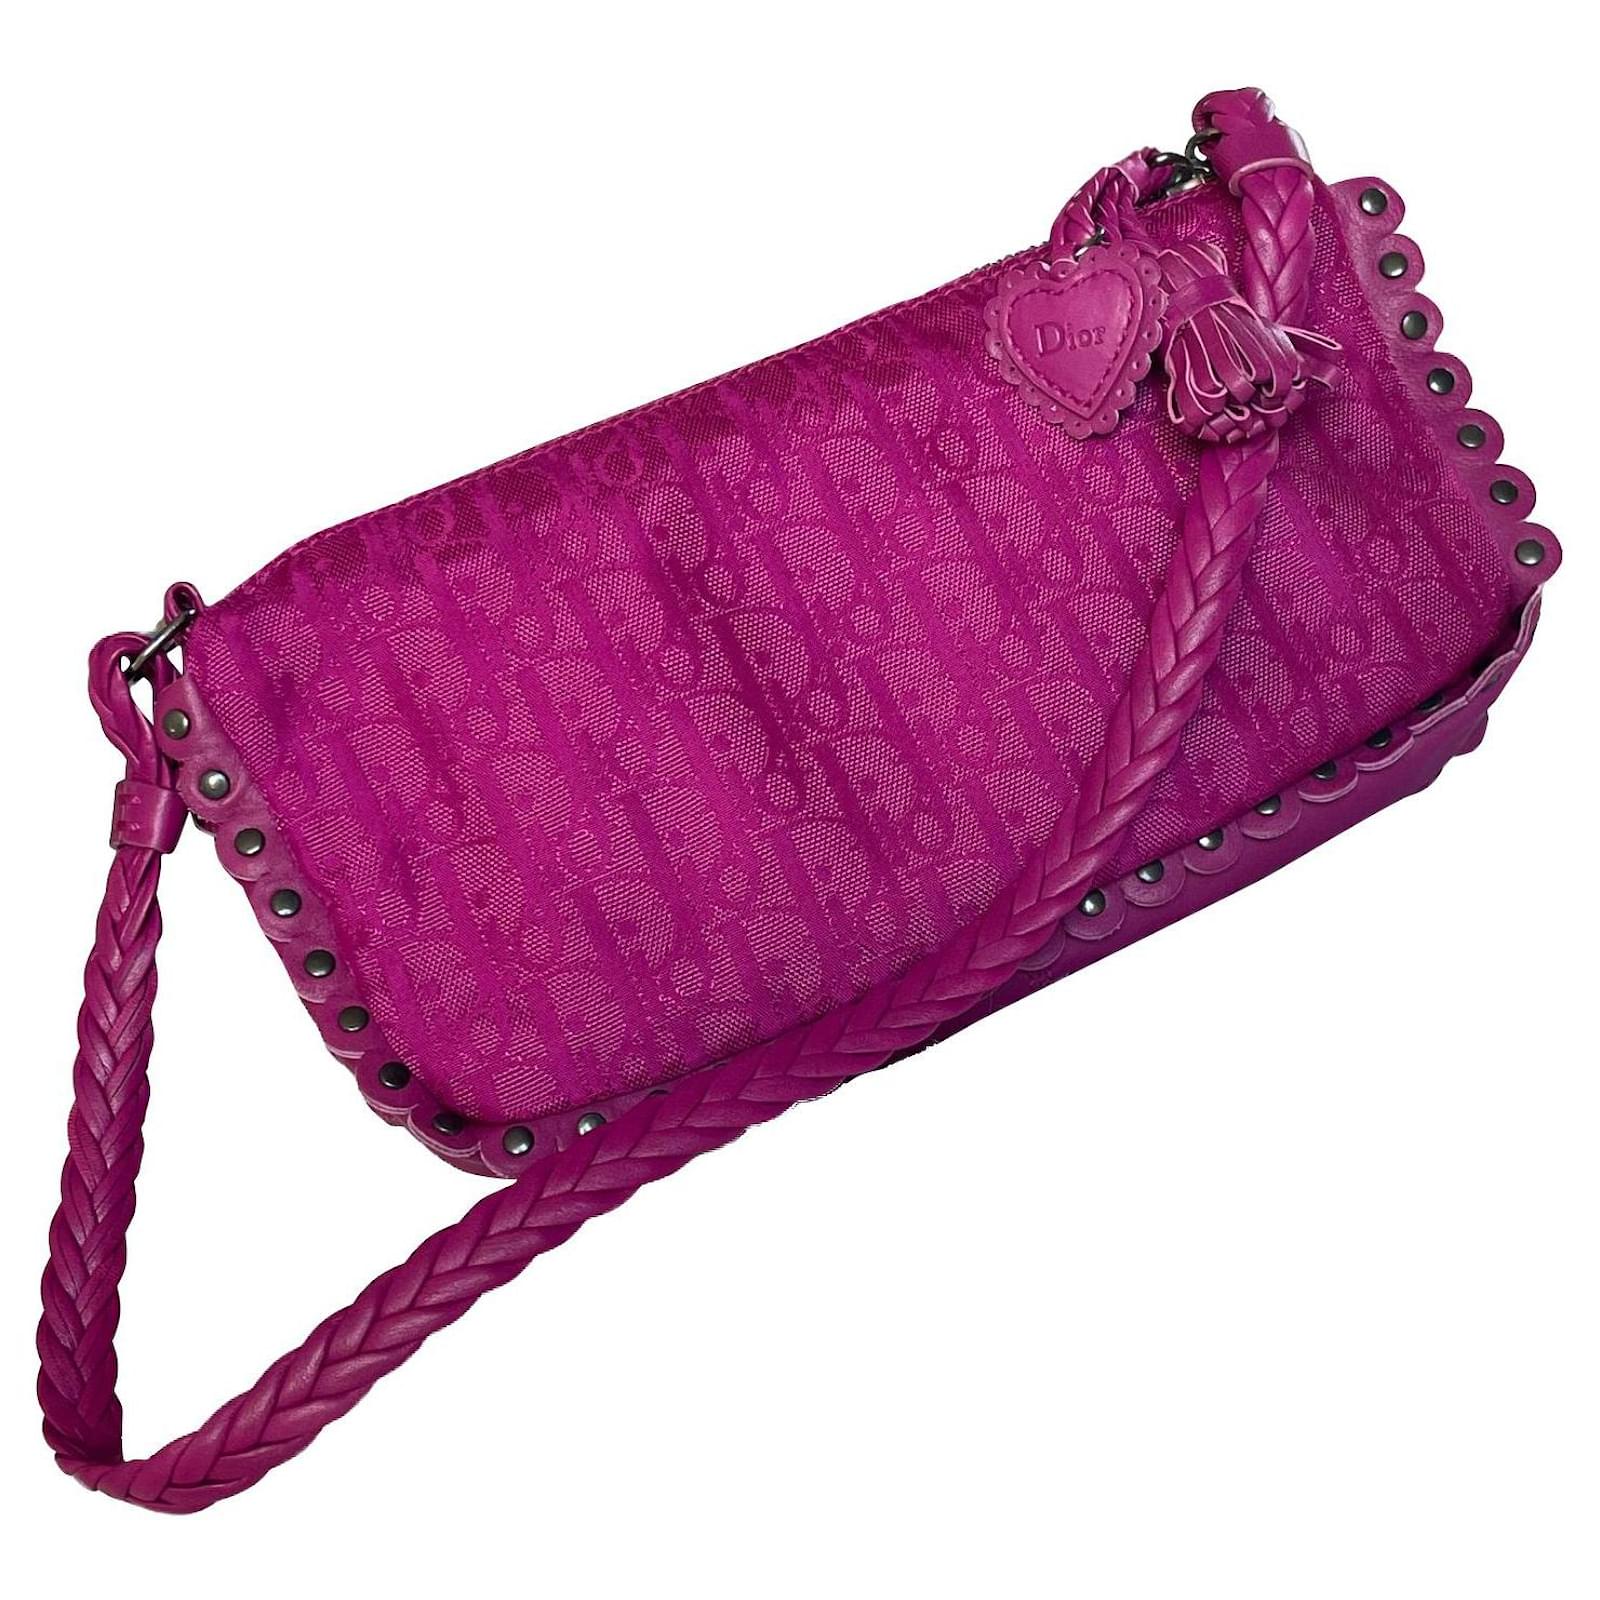 Christian Dior Romantic Pink Trotter Bag